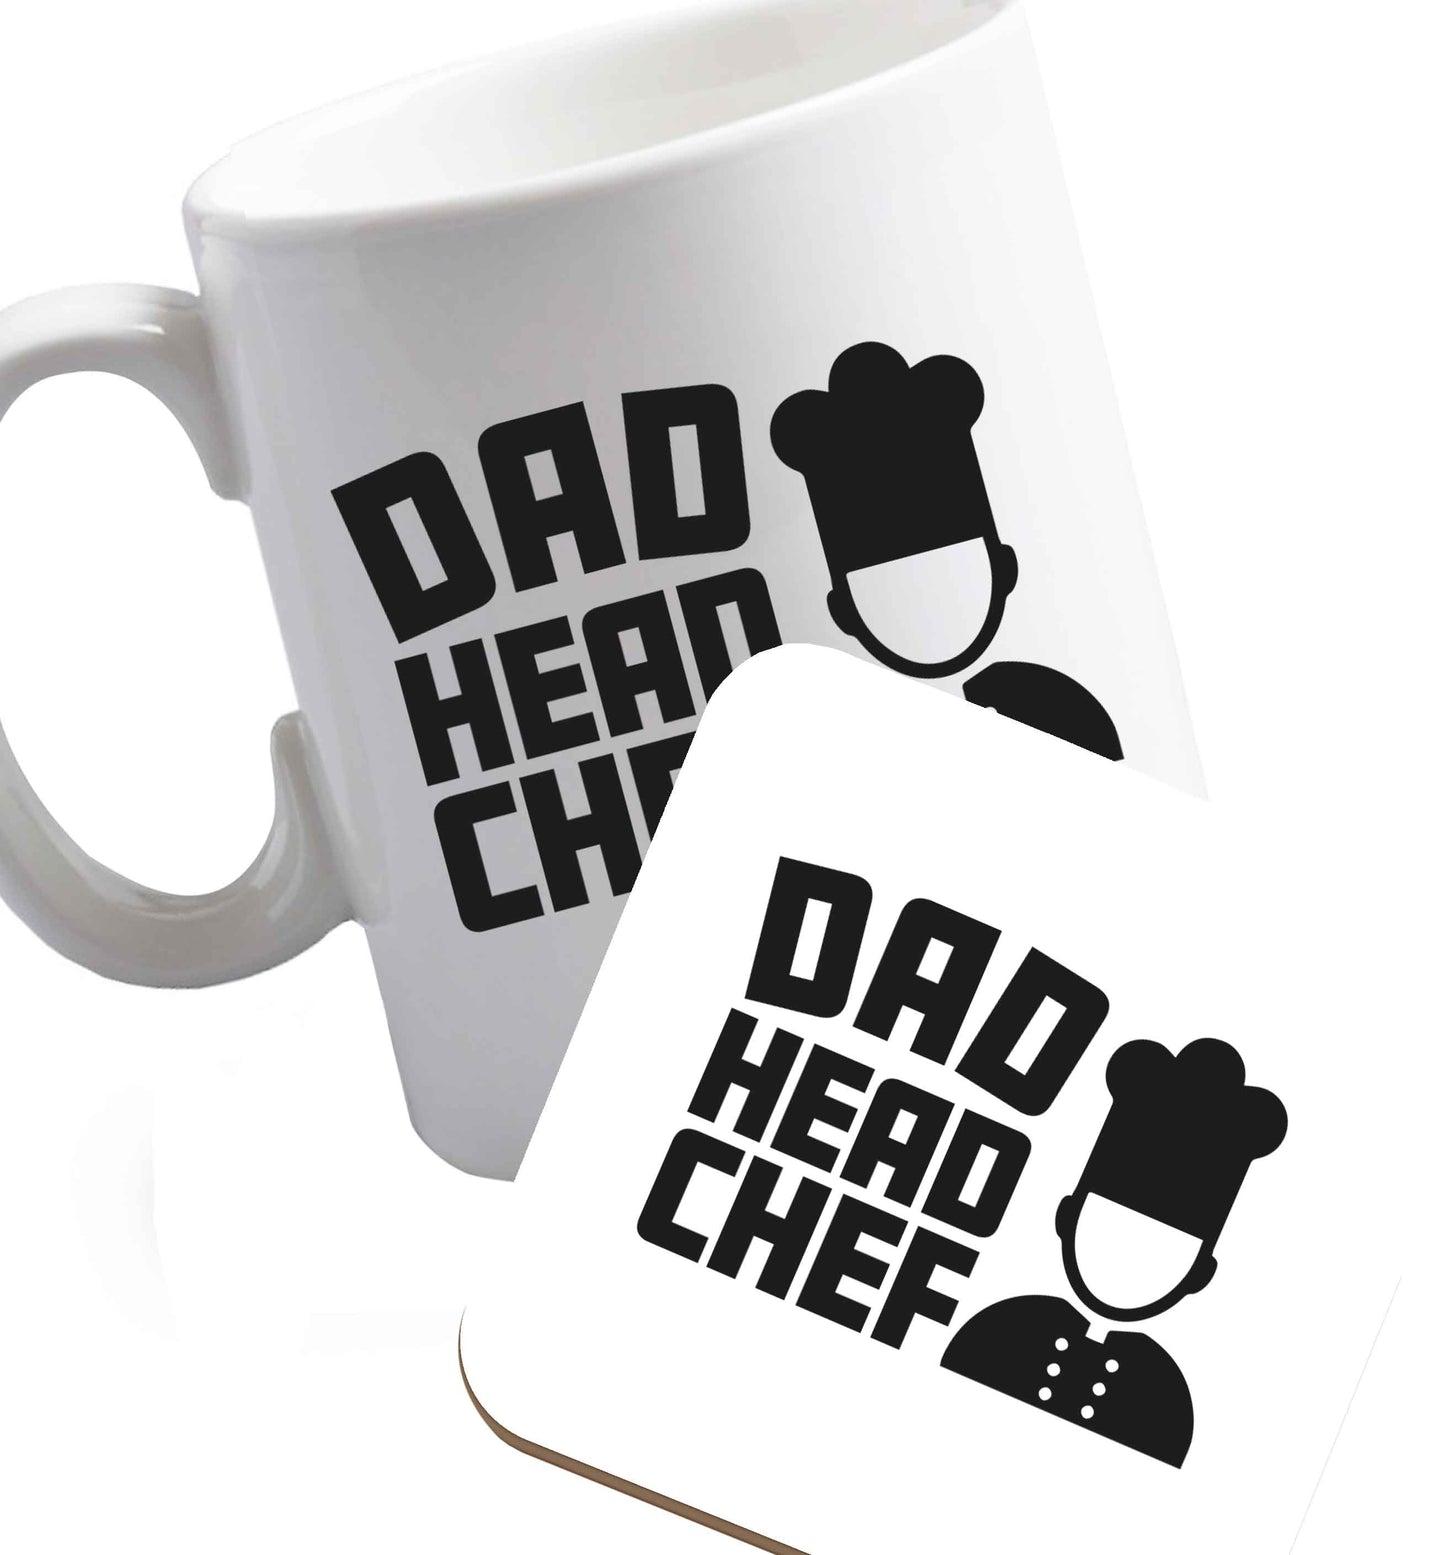 10 oz Dad head chef ceramic mug and coaster set right handed